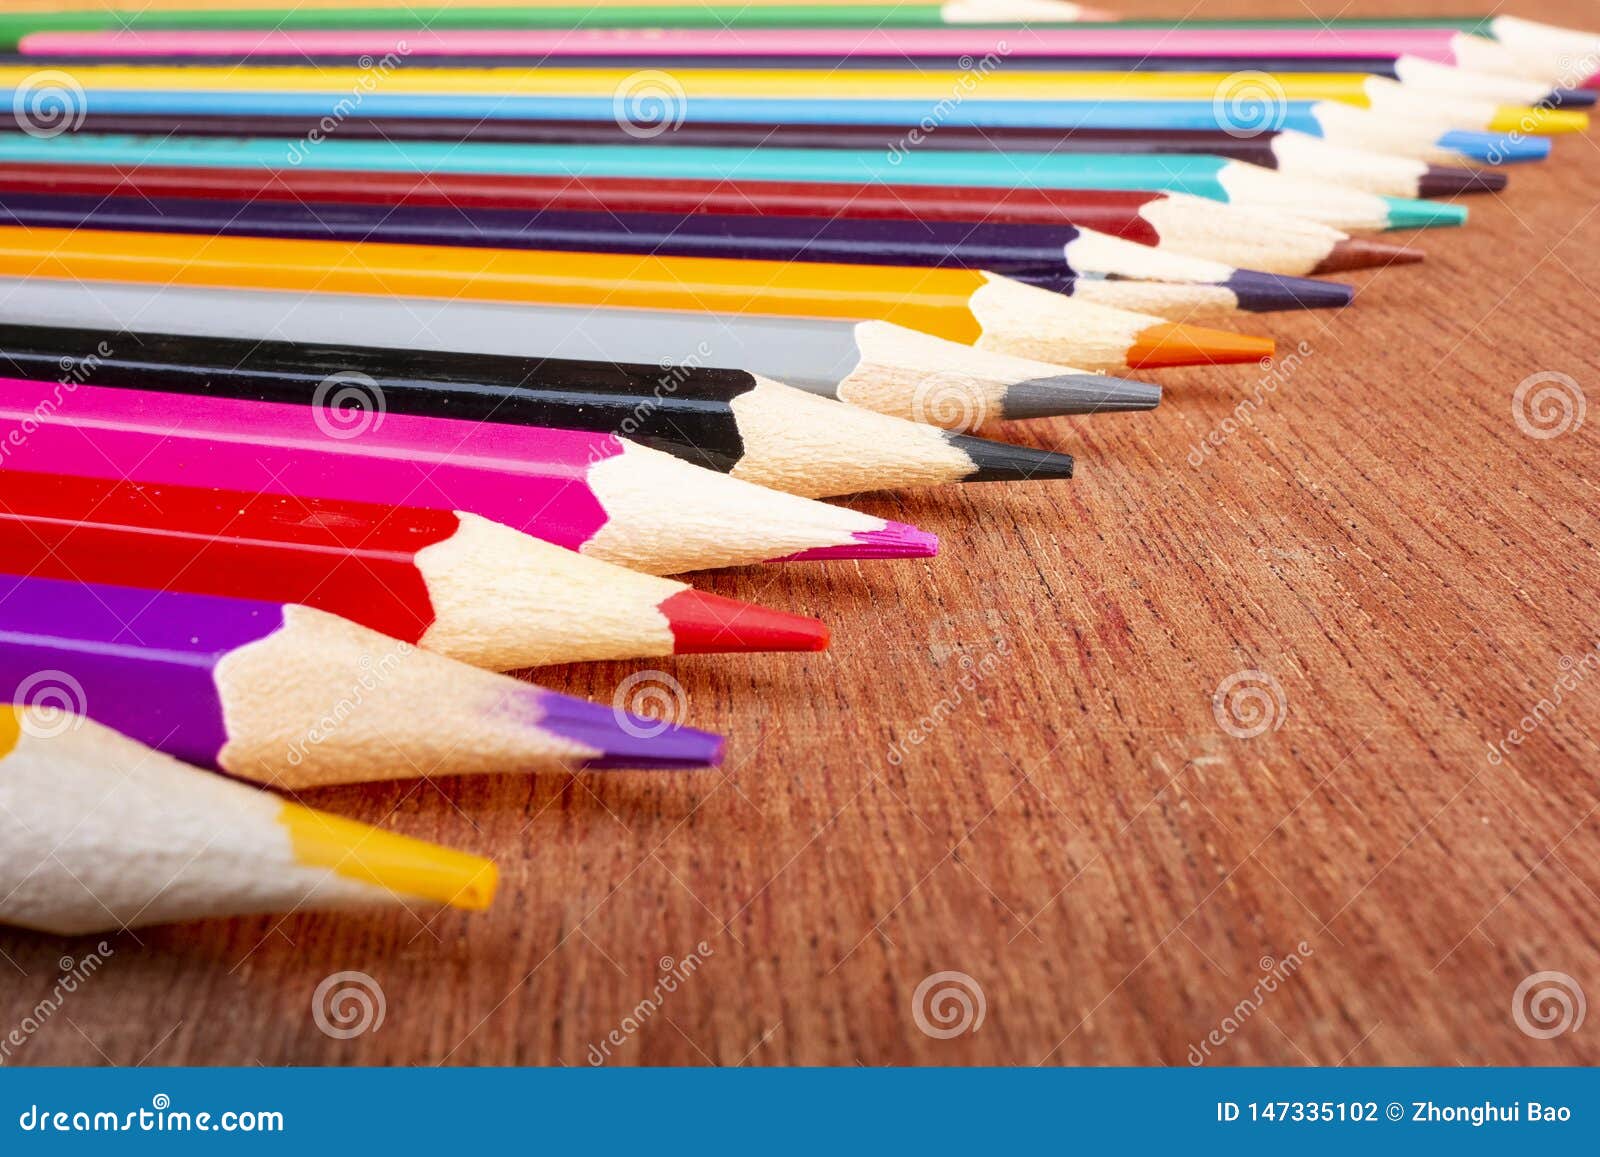 Coloured pencils arranged neatly on the desktop